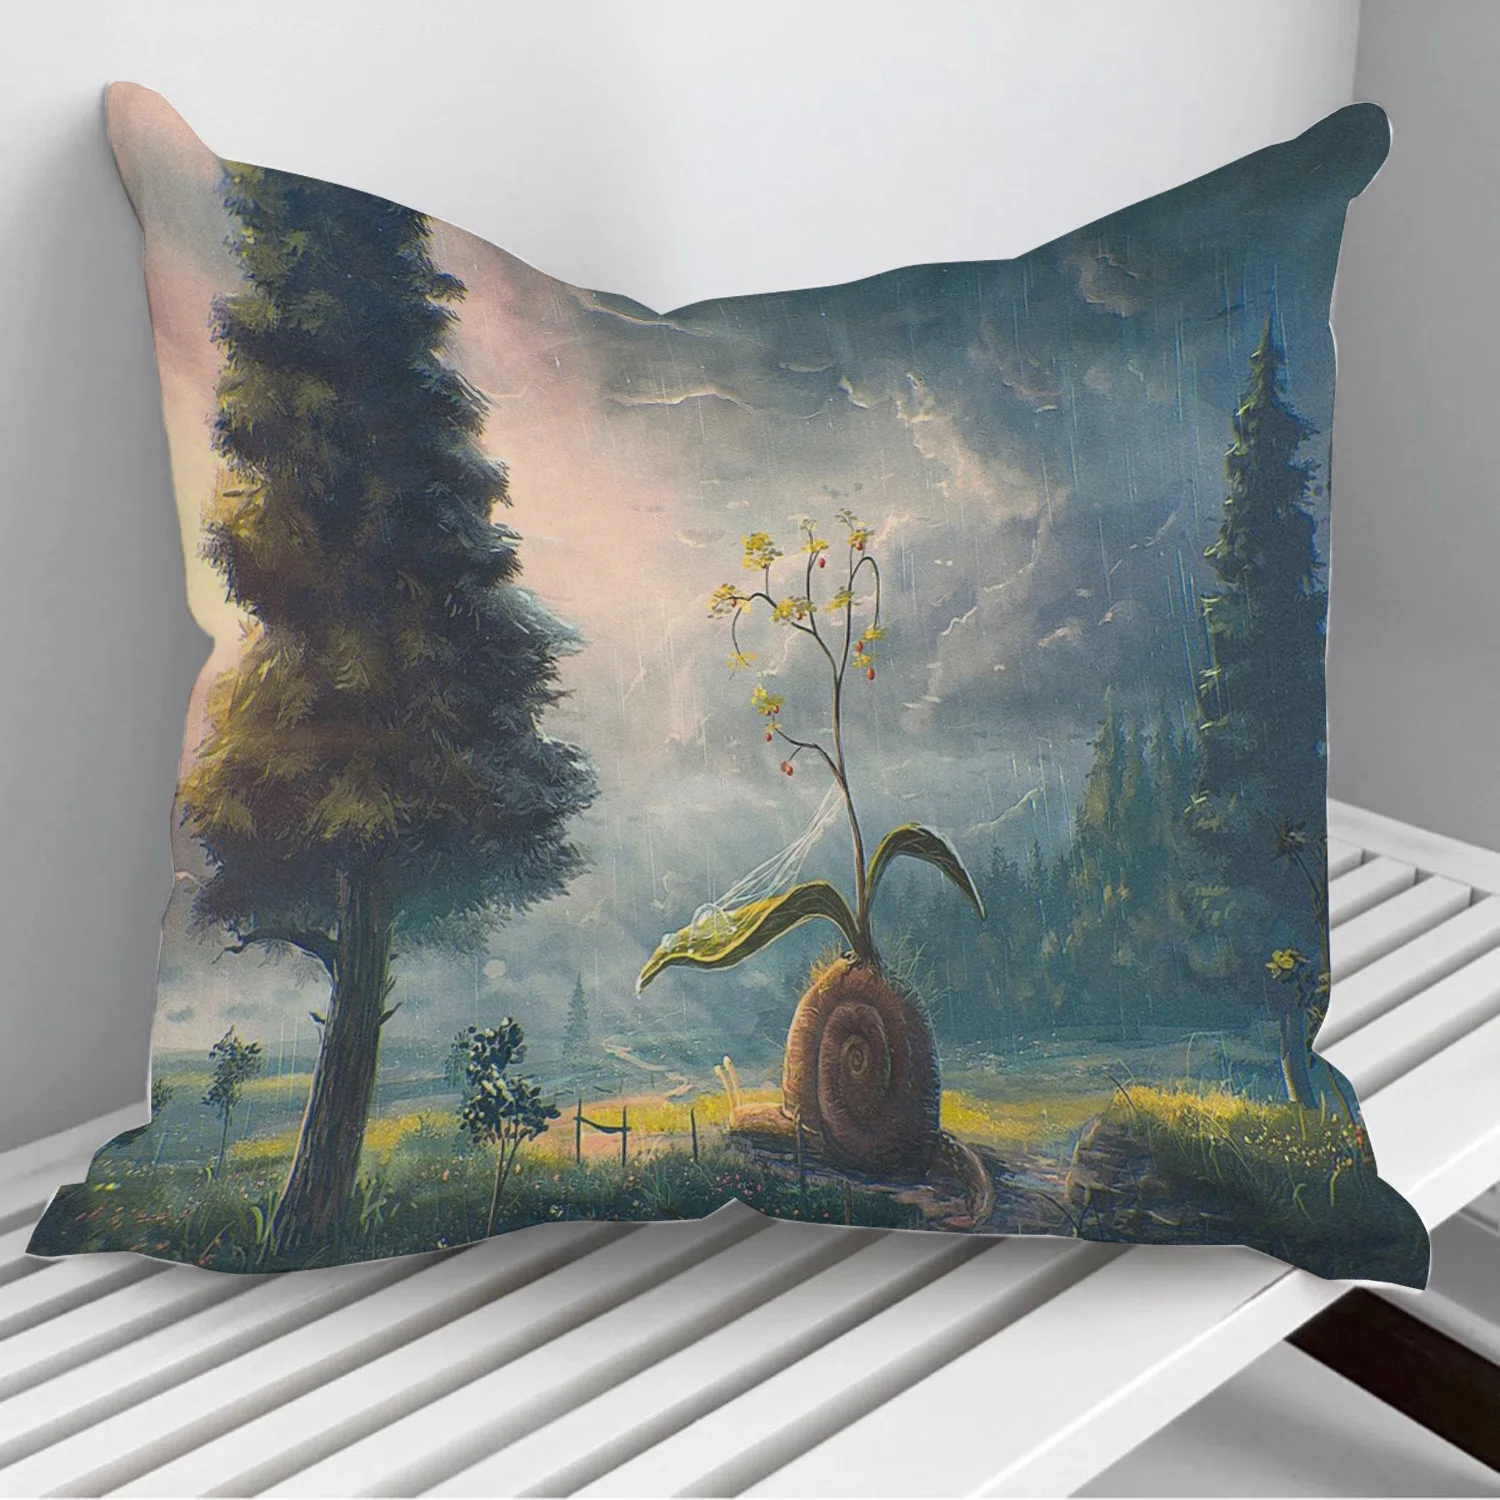 

Animal fantasy Throw Pillows Cushion Cover On Sofa Home Decor 45*45cm 40*40cm Gift Pillowcase Cojines Dropshipping